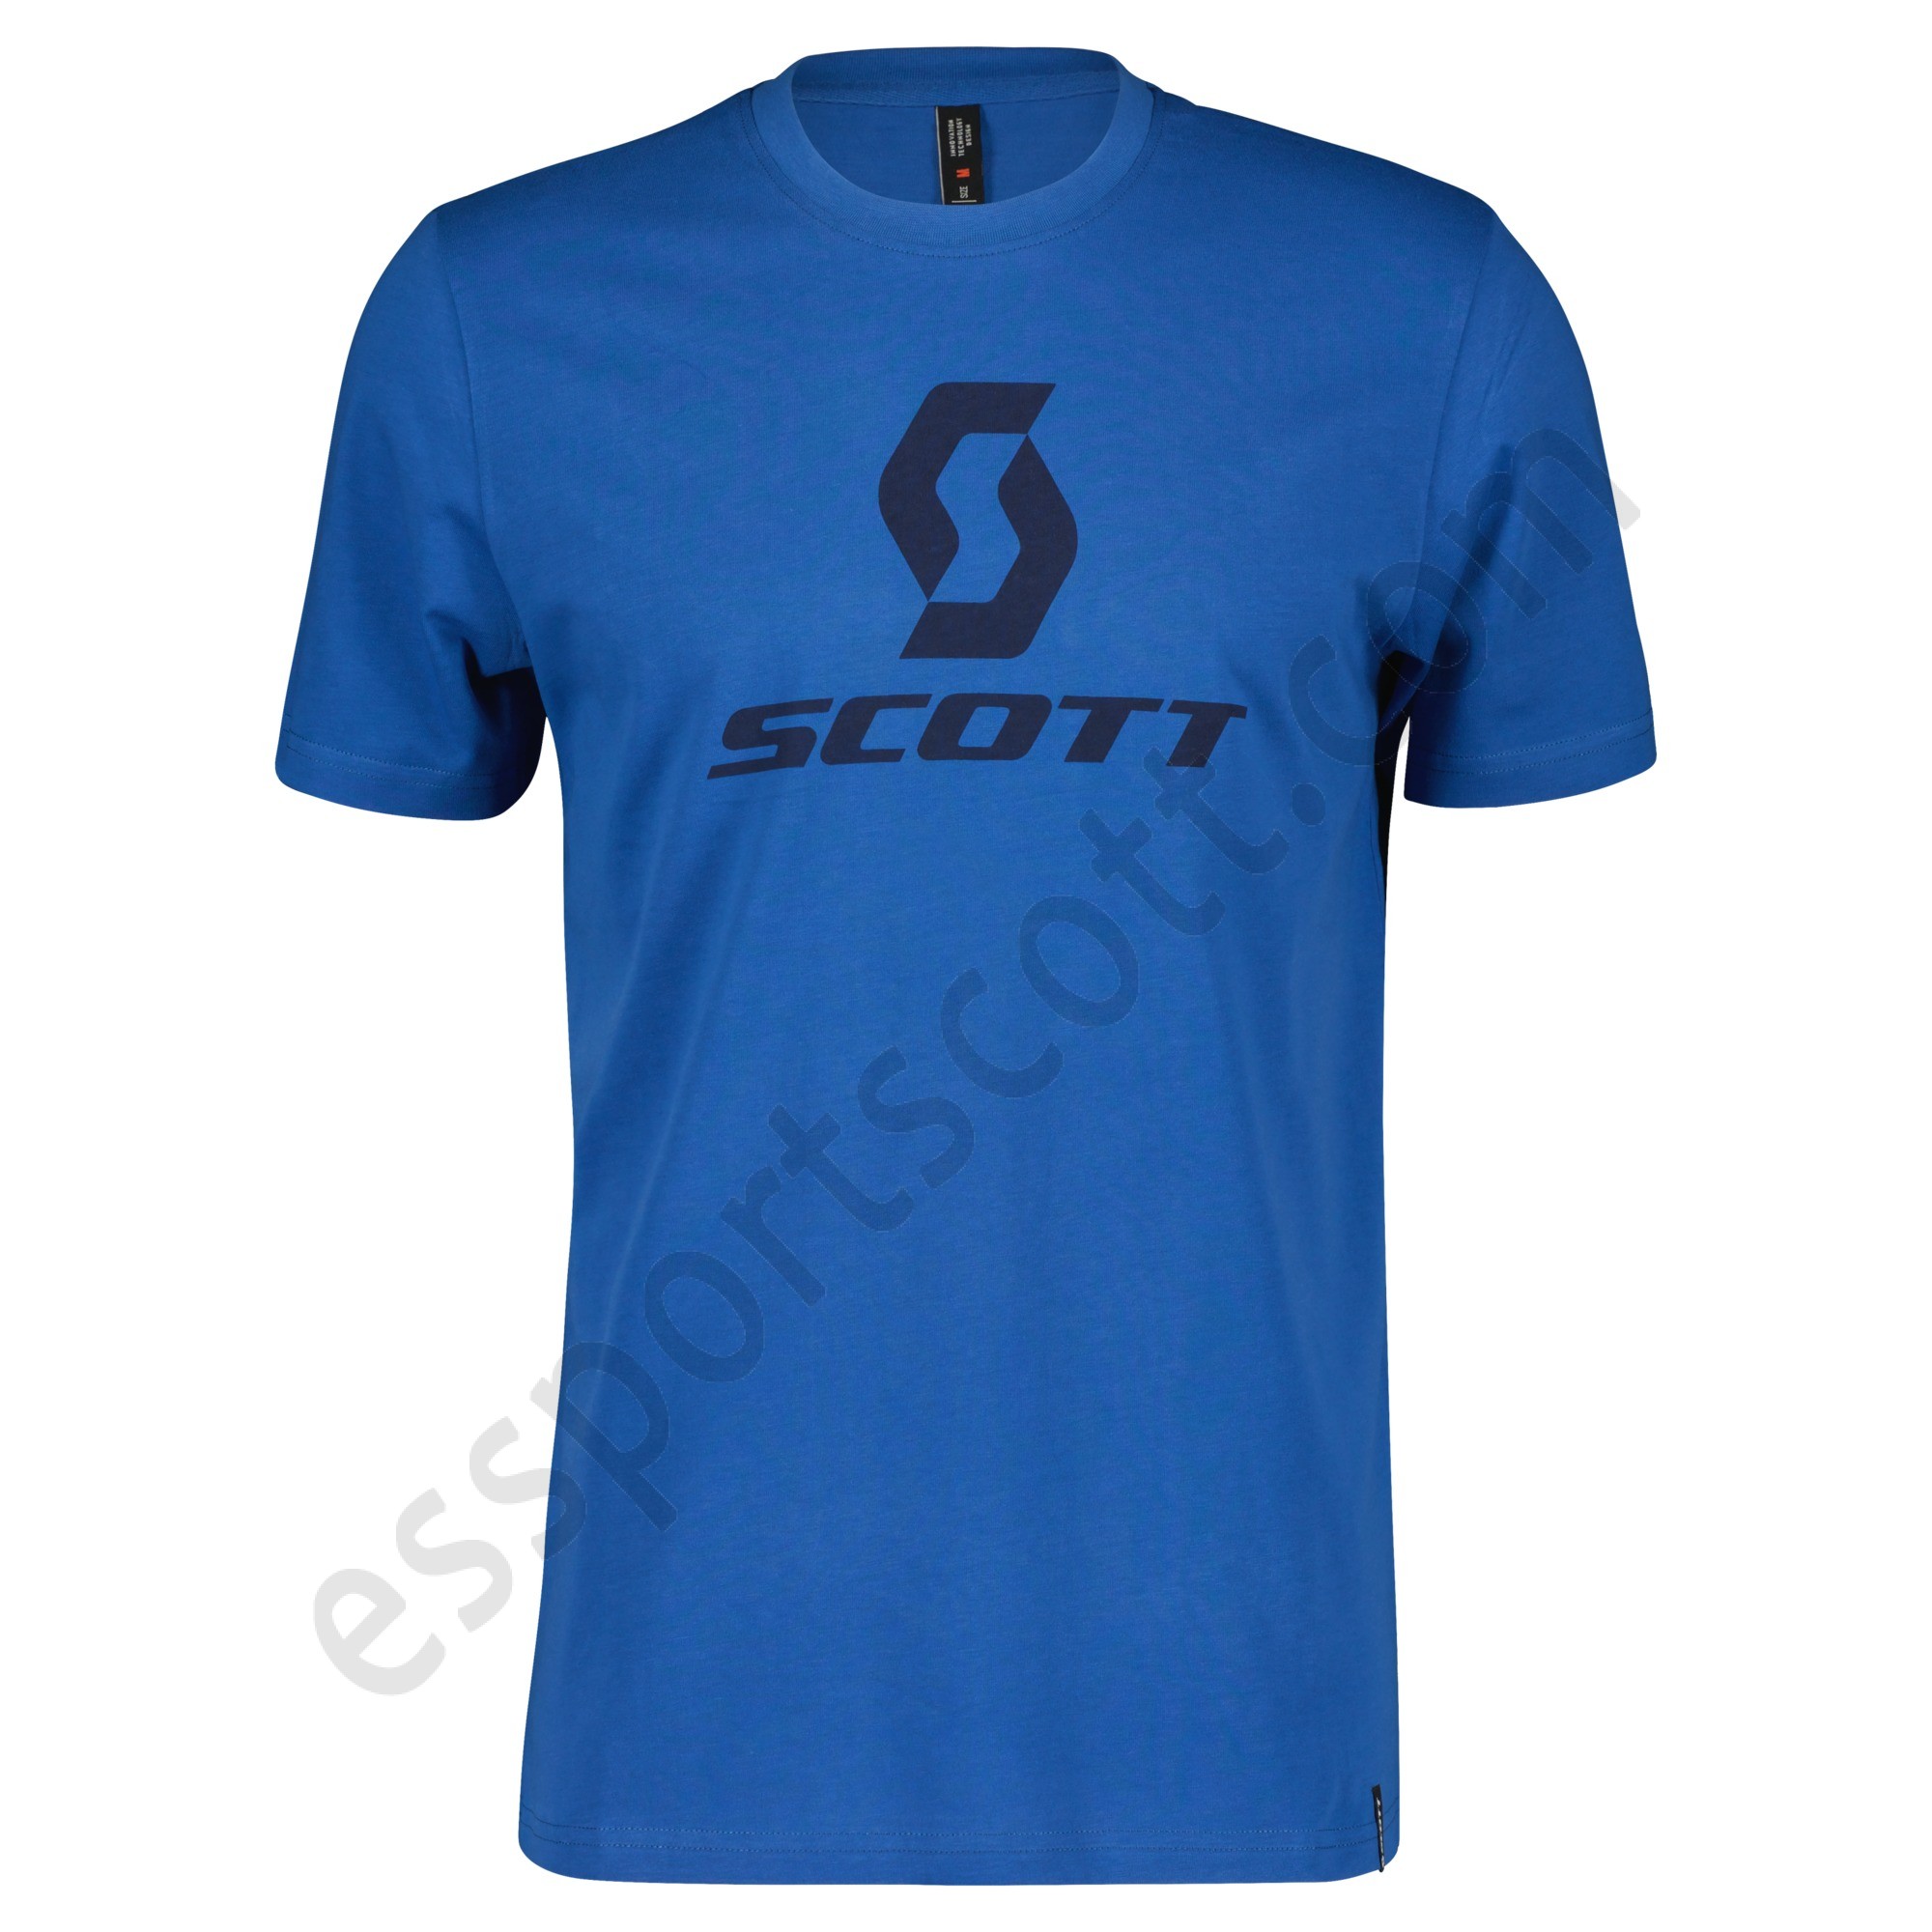 Scott Tienda ◇ Camiseta de manga corta para hombre Icon - Scott Tienda ◇ Camiseta de manga corta para hombre Icon